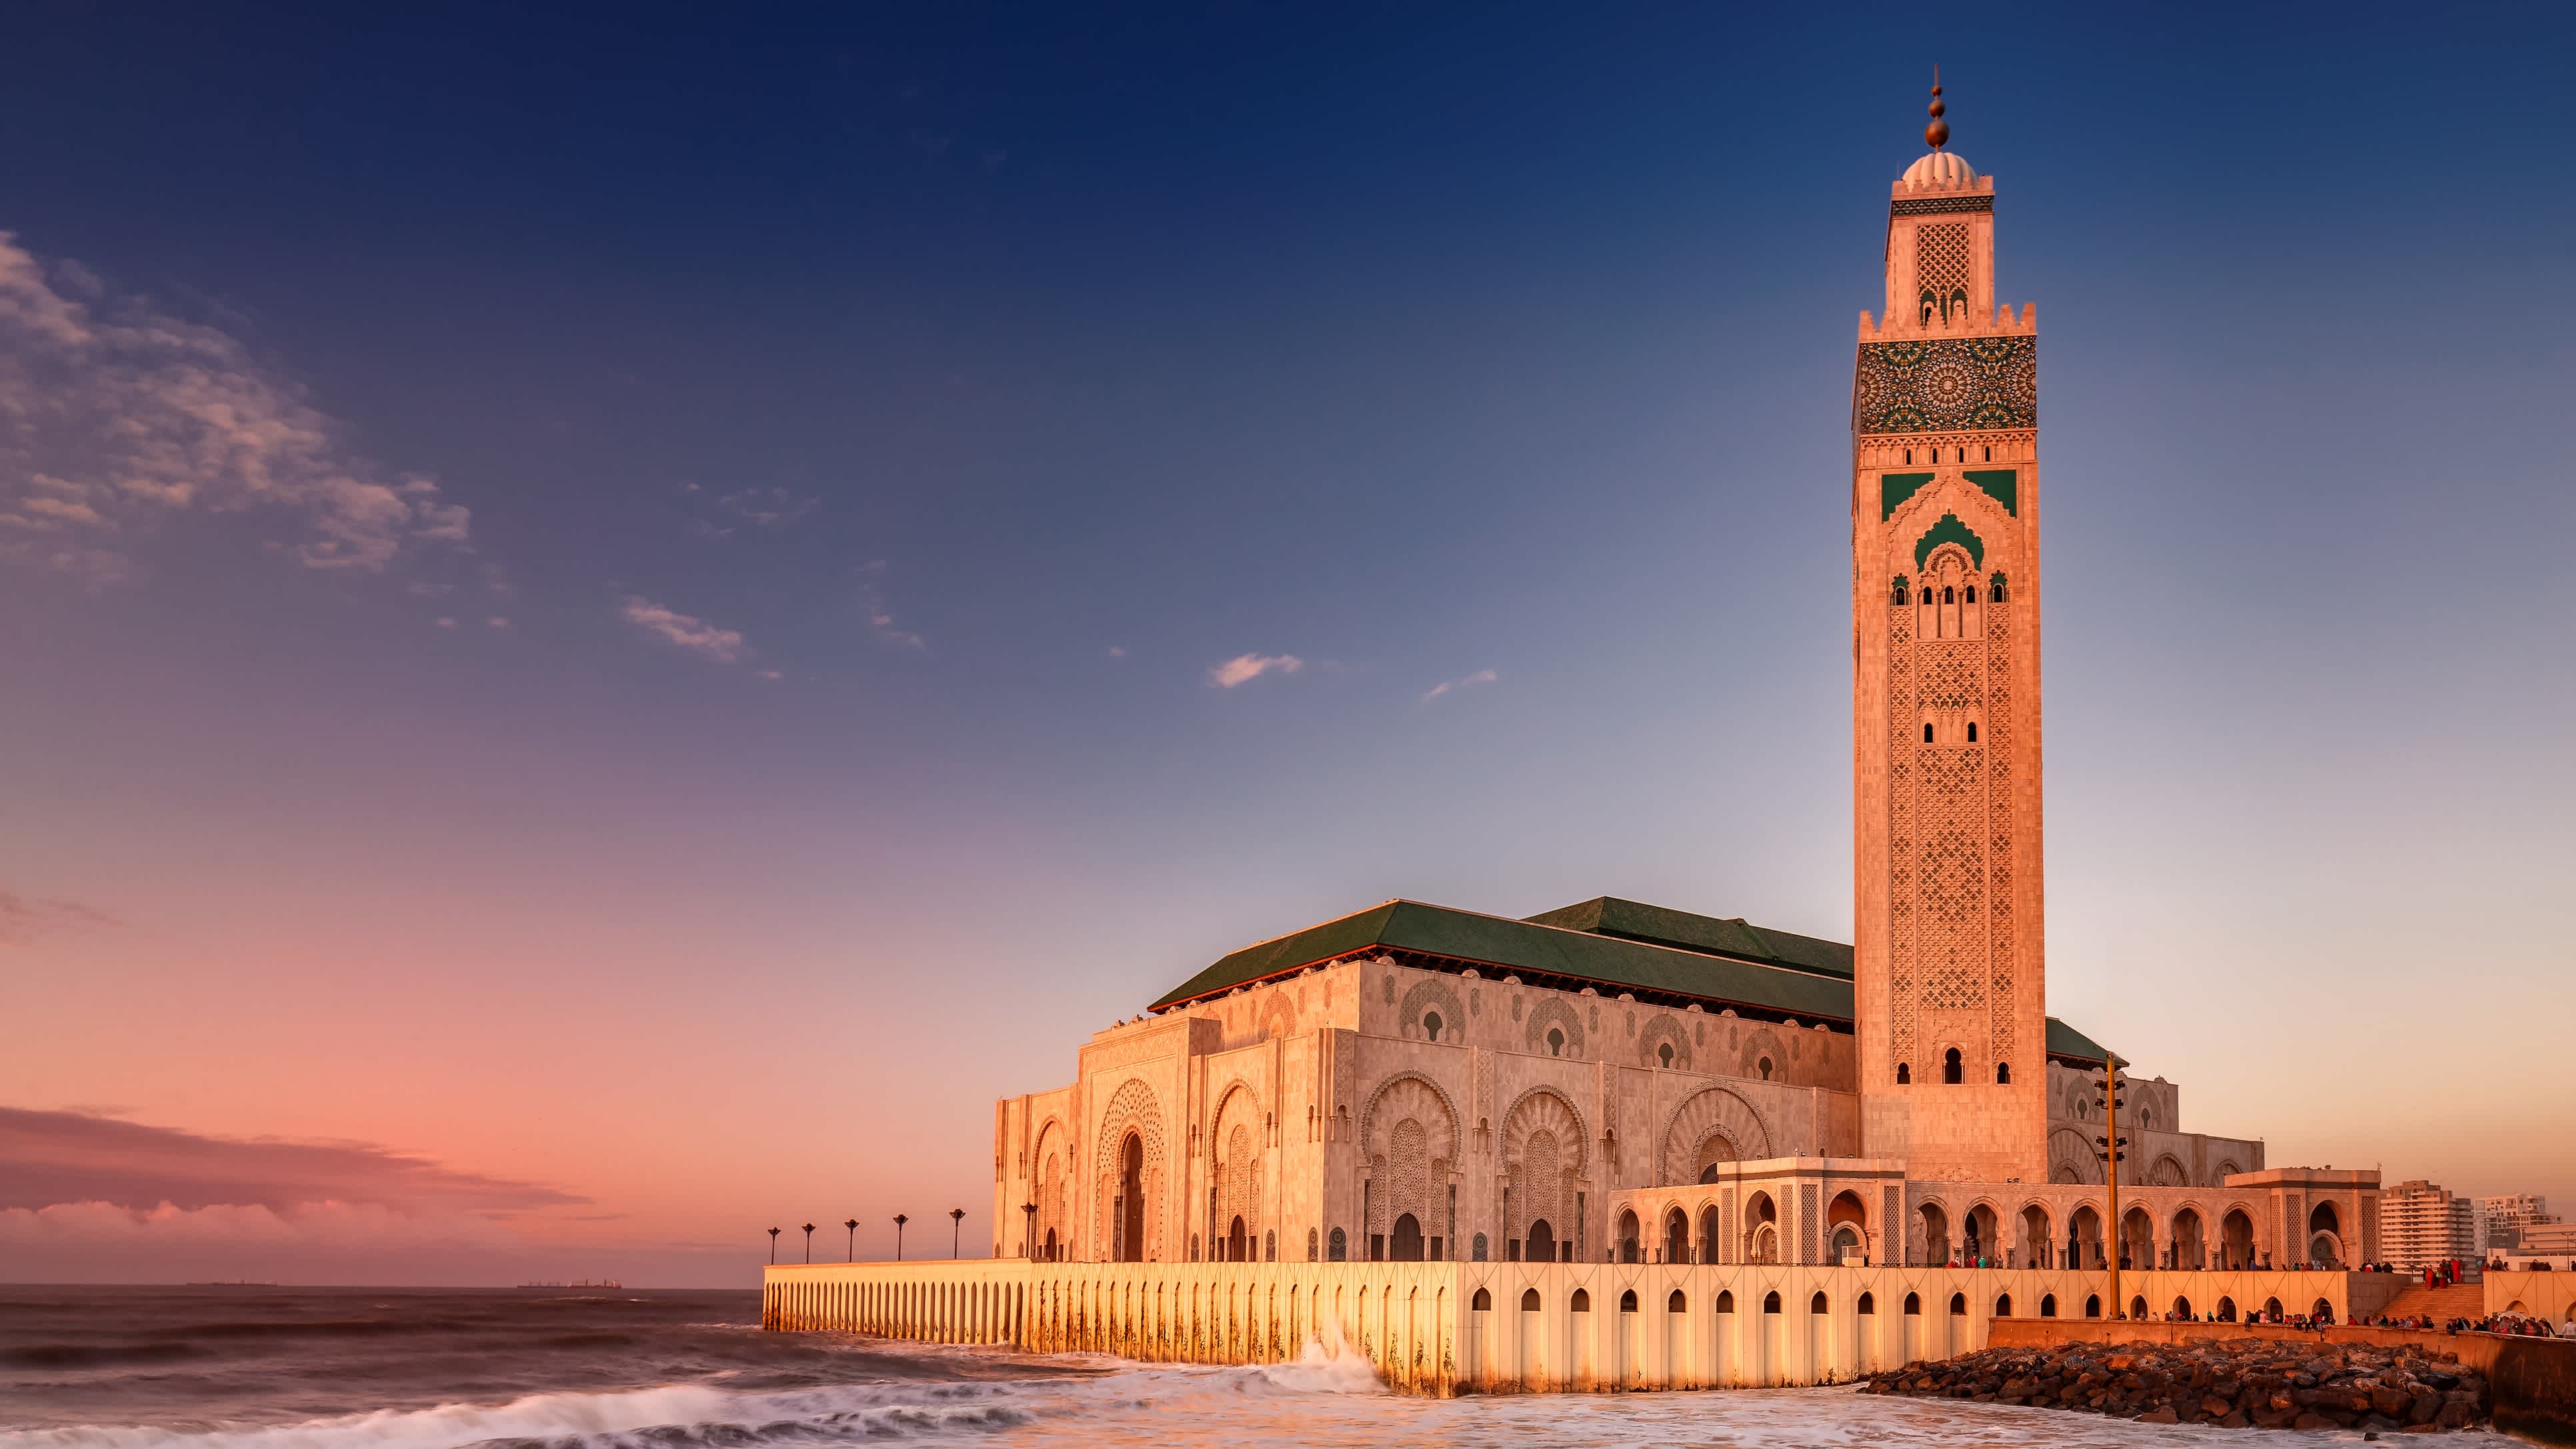 The Hassan II. Mosque in Casablanca Morocco